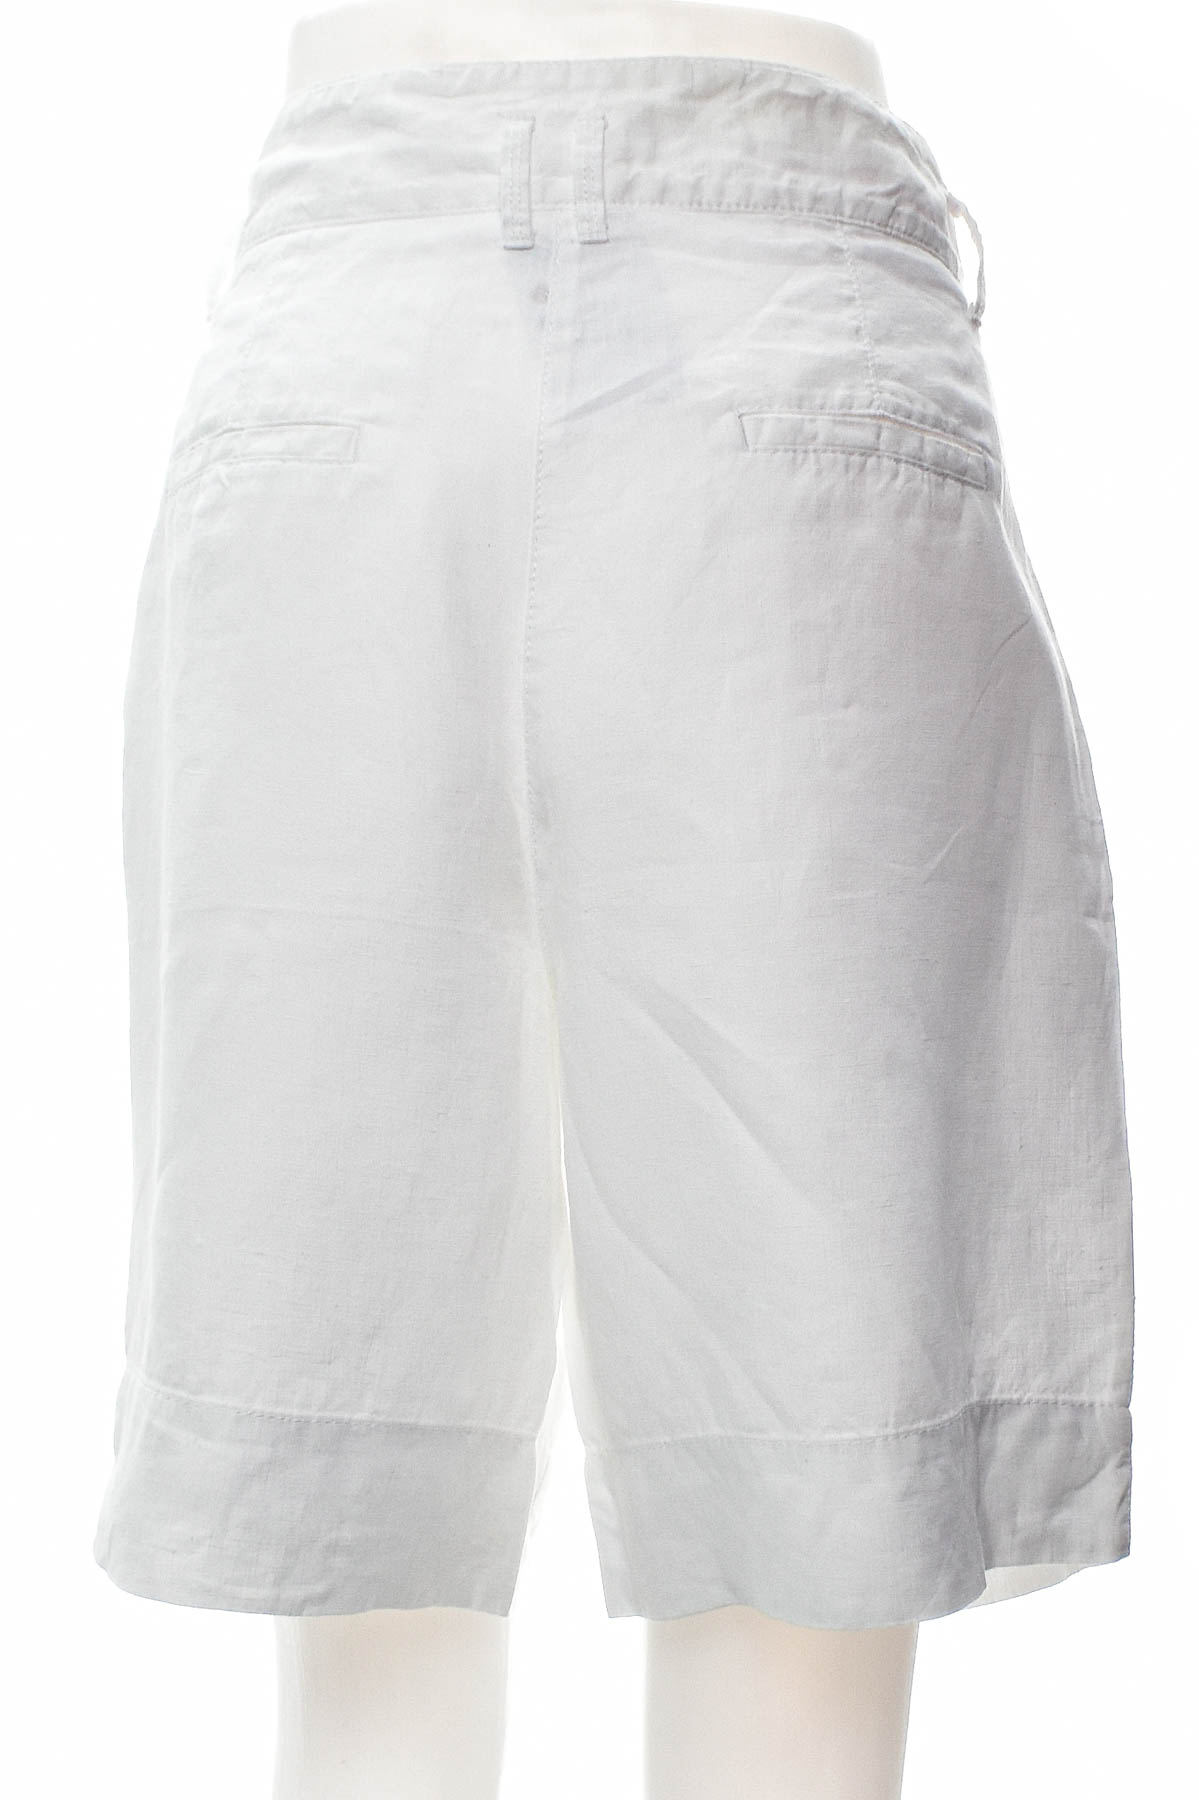 Female shorts - GERRY WEBER - 1